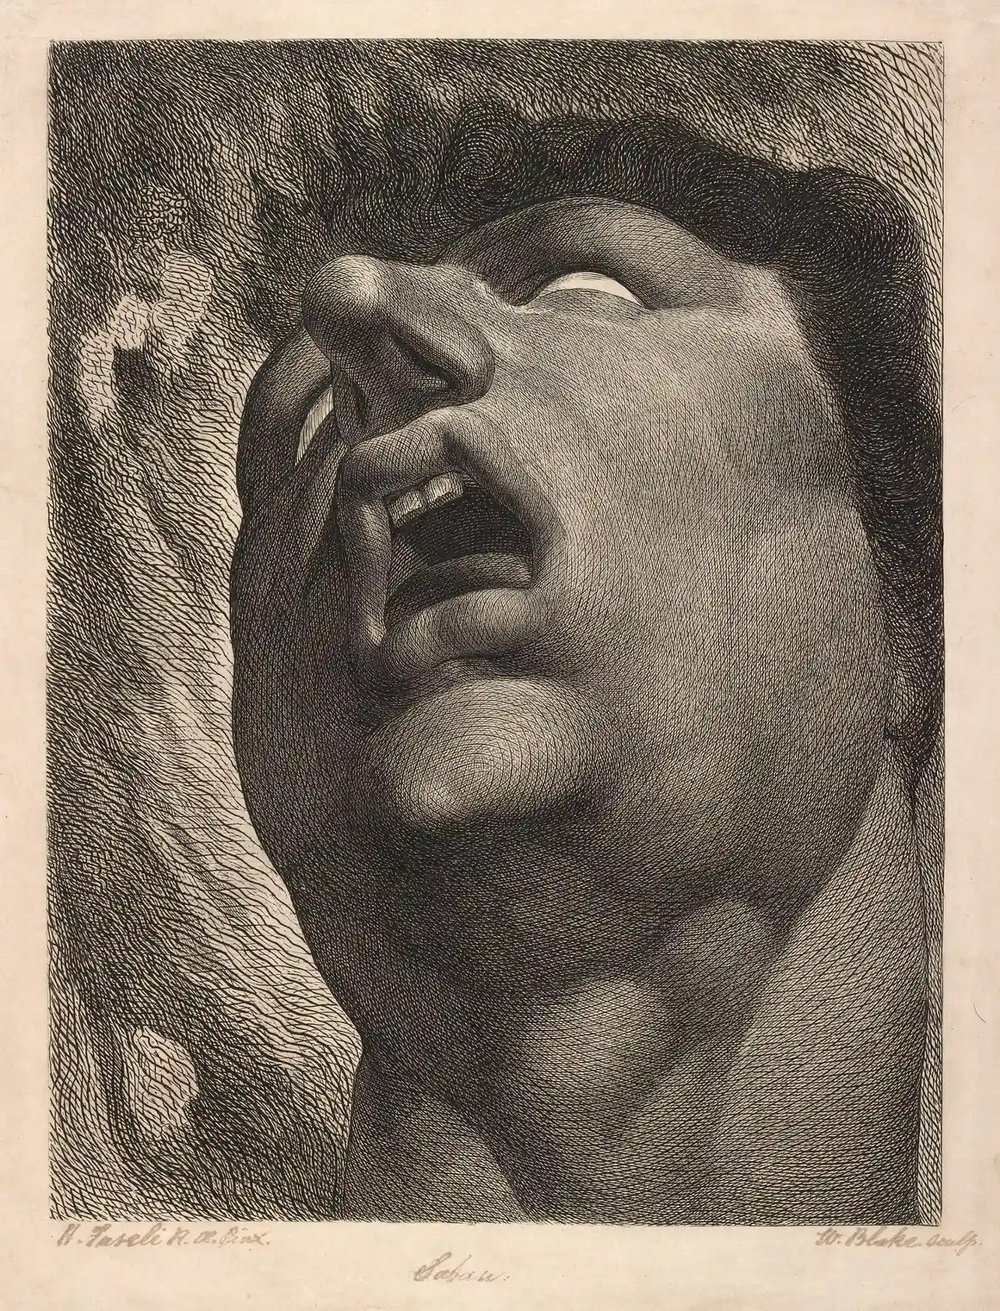 Satan by William Blake, 1789